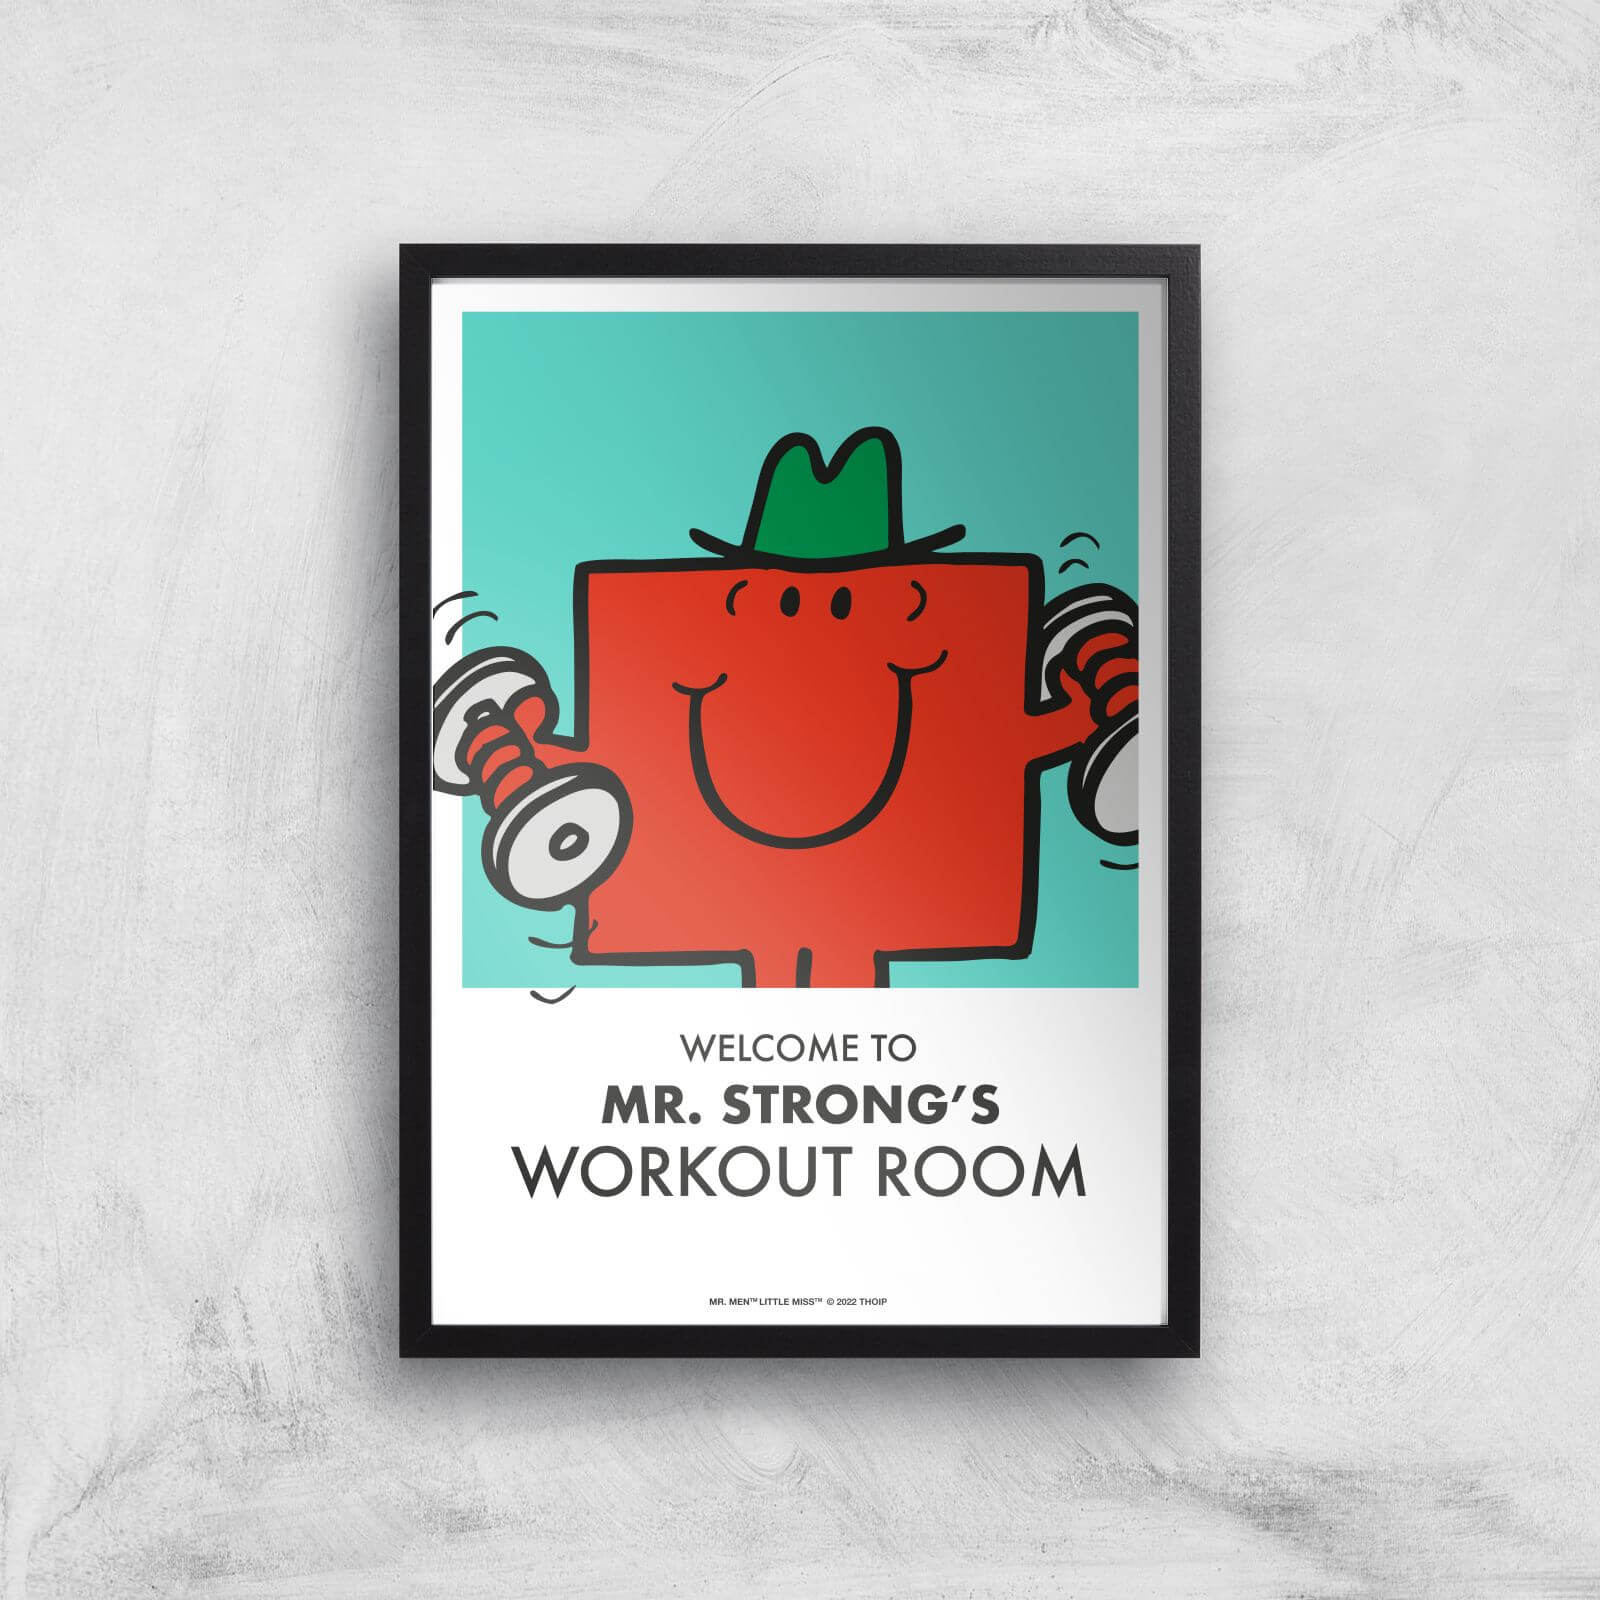 Mr Men & Little Miss Mr. Strong's Workout Room Giclee Art Print - A3 - Black Frame